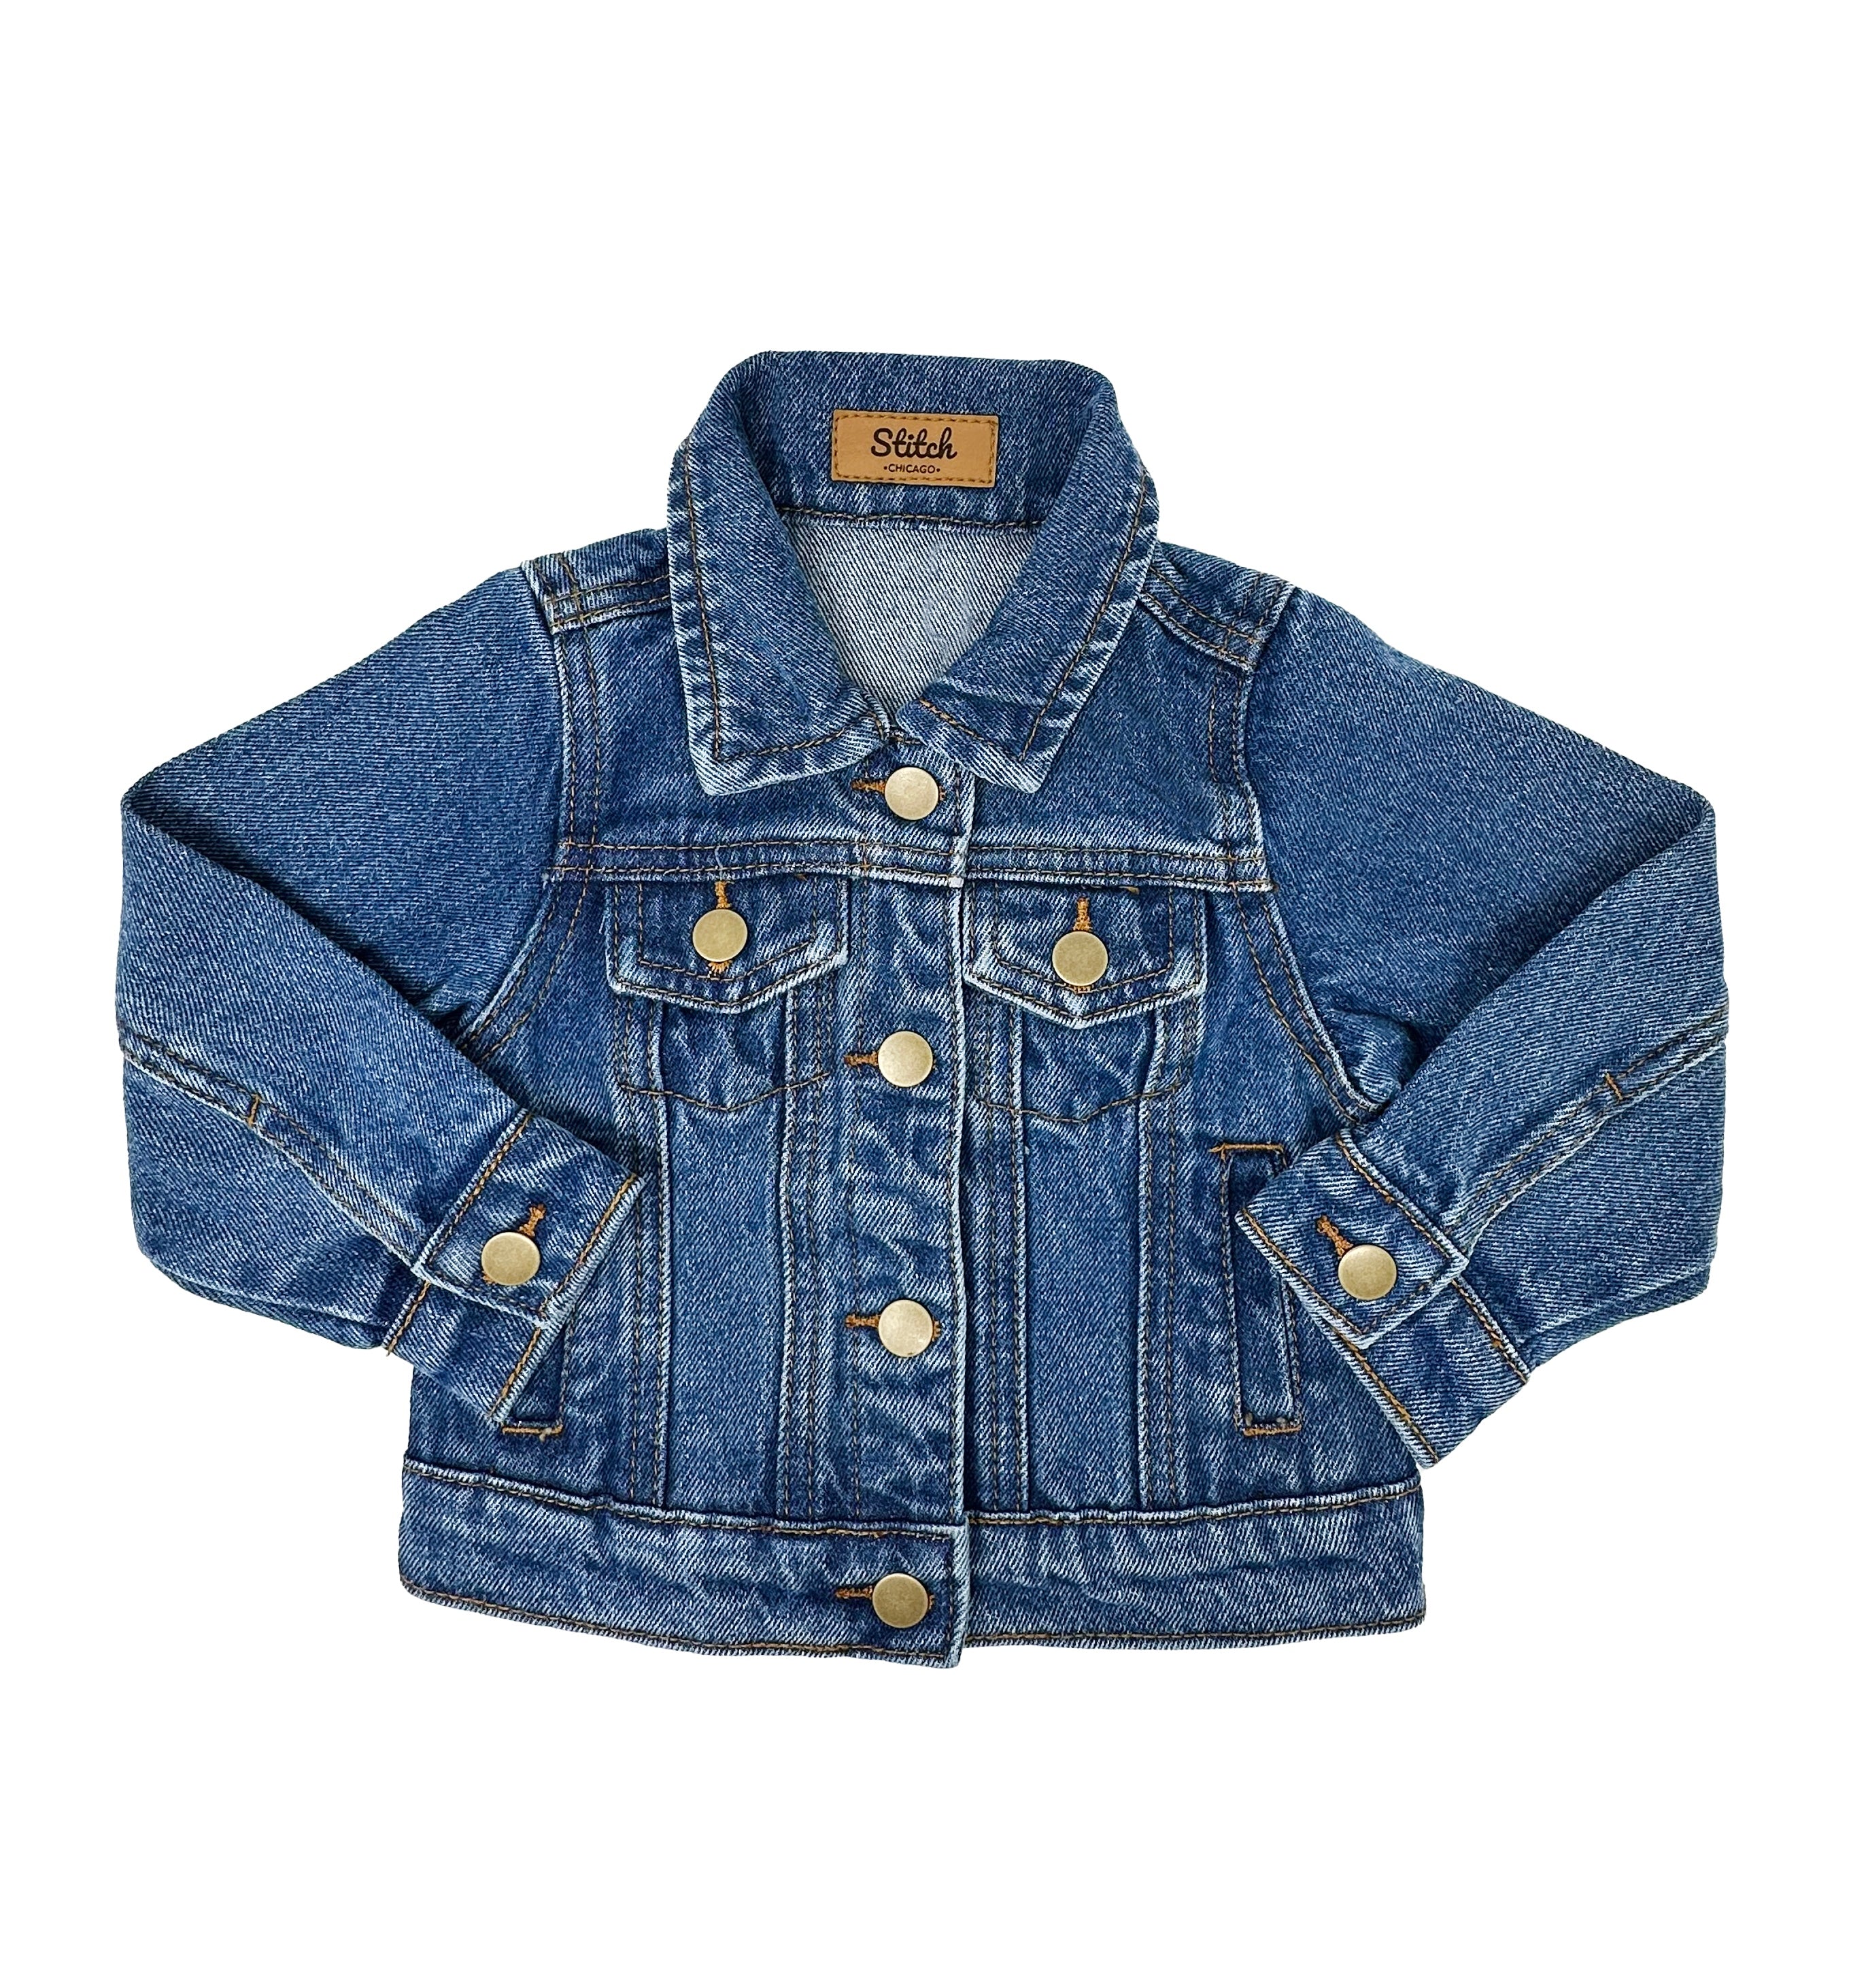 Kids personalised denim jacket  Baby denim jacket, Jackets